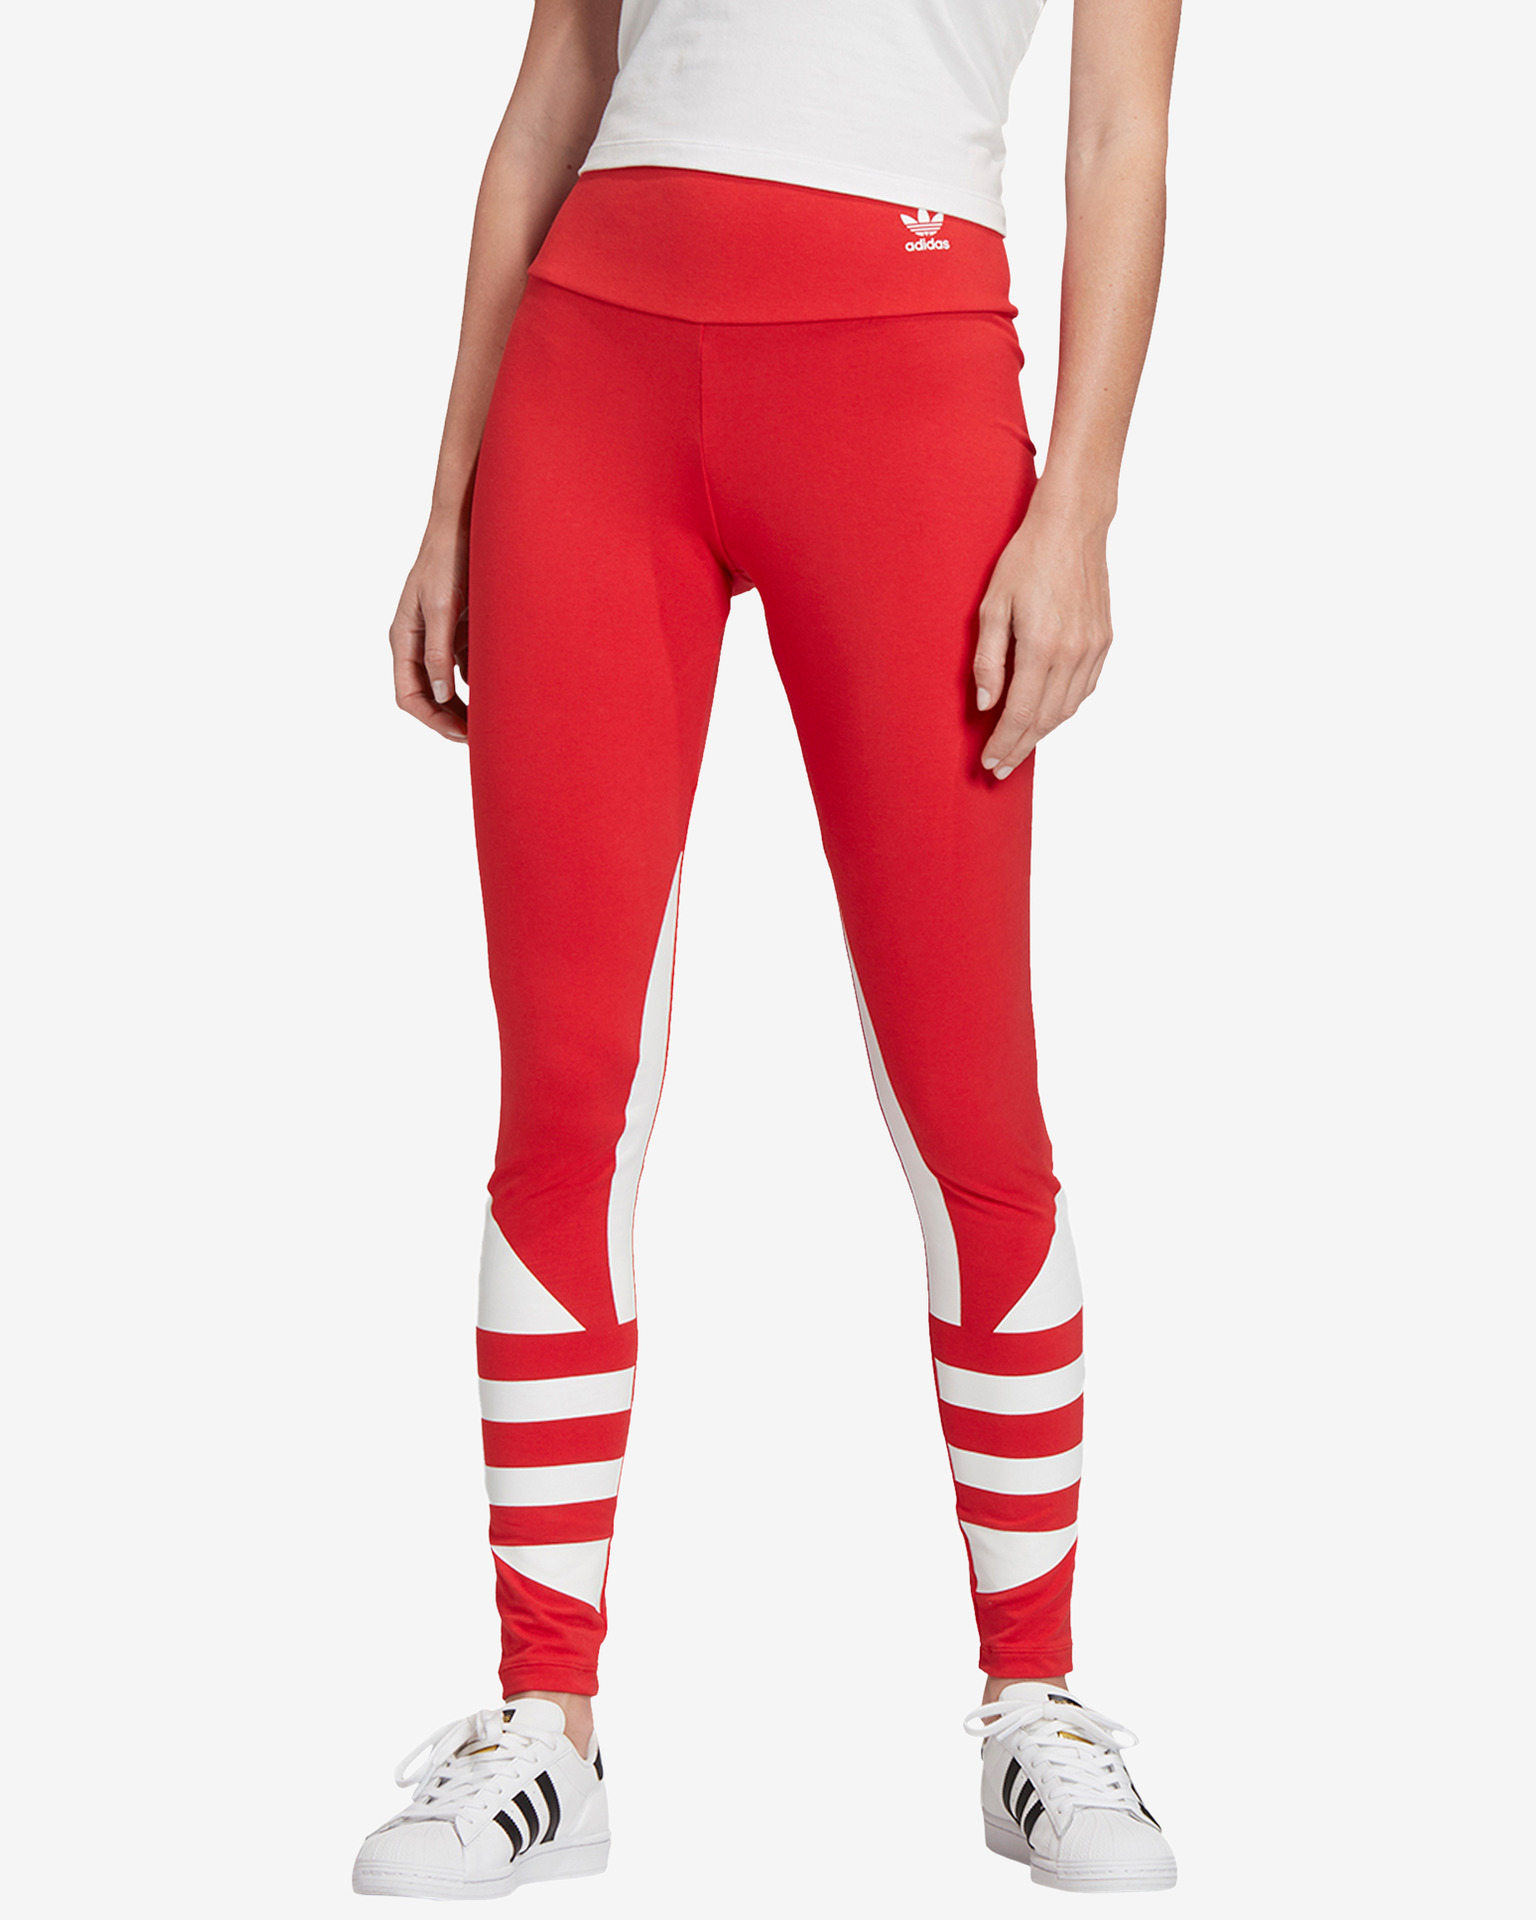 adidas Original leggings in red